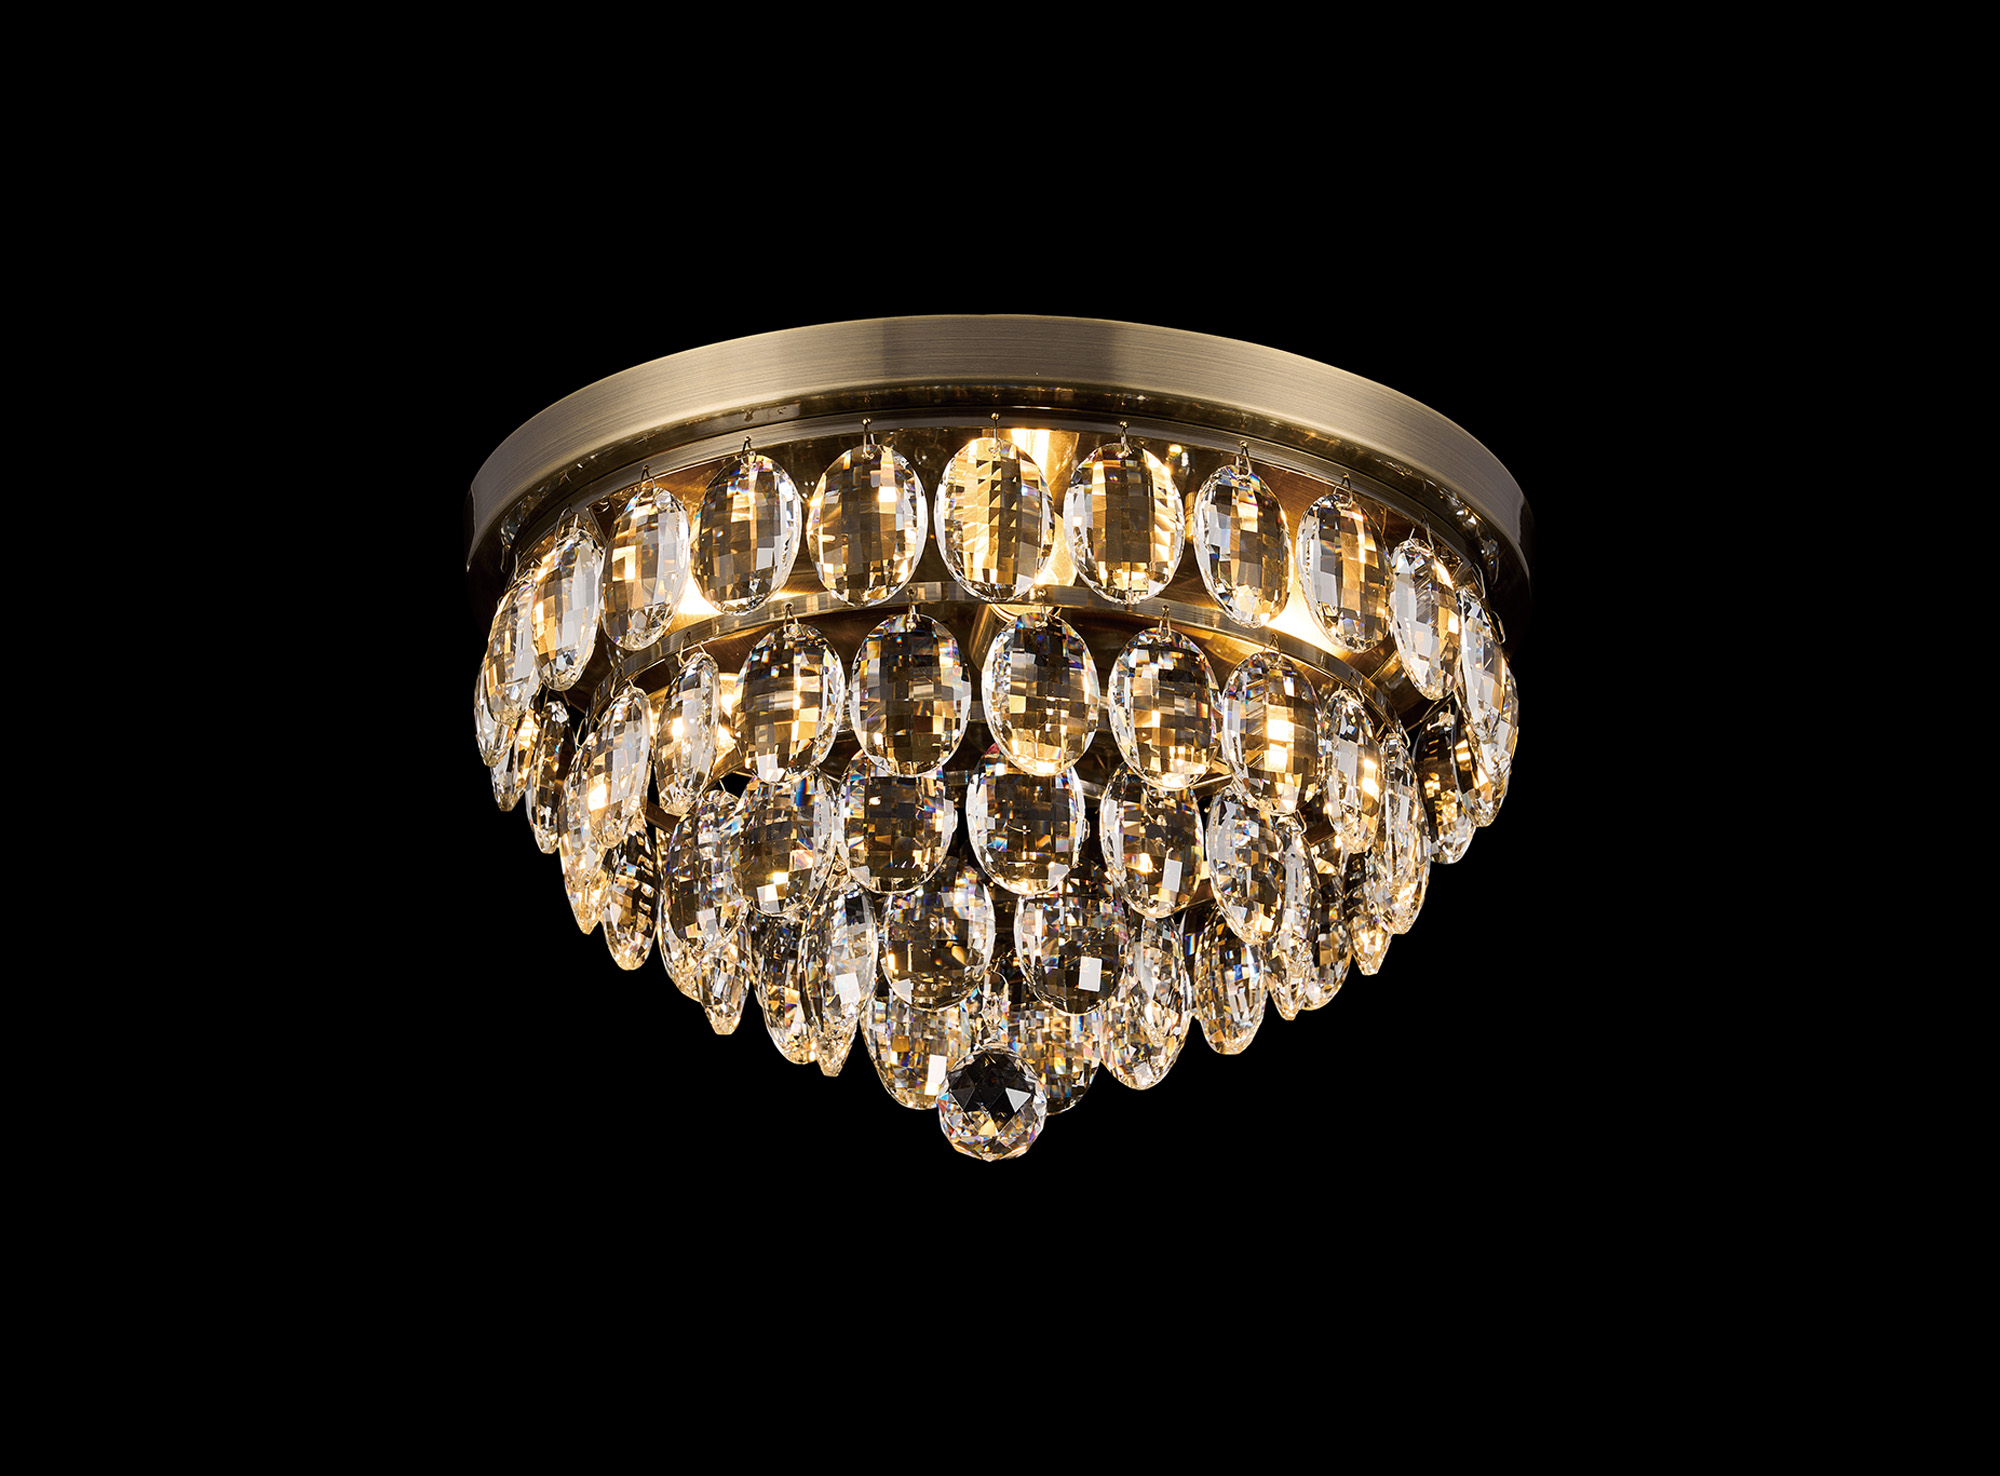 Coniston Antique Brass Crystal Ceiling Lights Diyas Flush Crystal Fittings